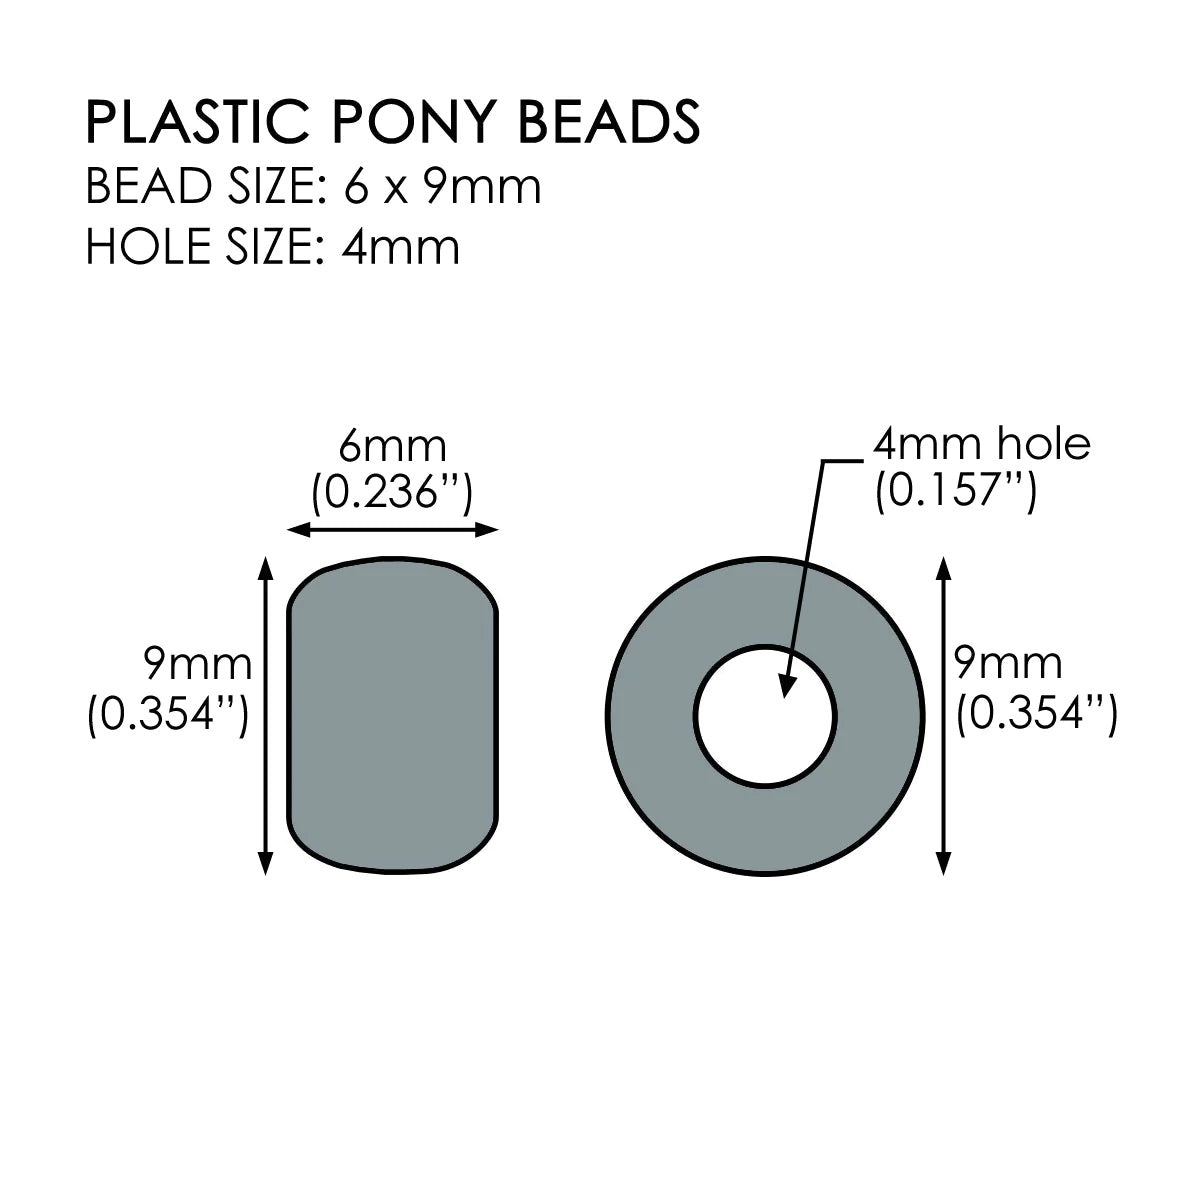 Sedona Earth Tones Set, 16 Colors, Plastic Pony Beads 6 x 9mm, 2400 beads